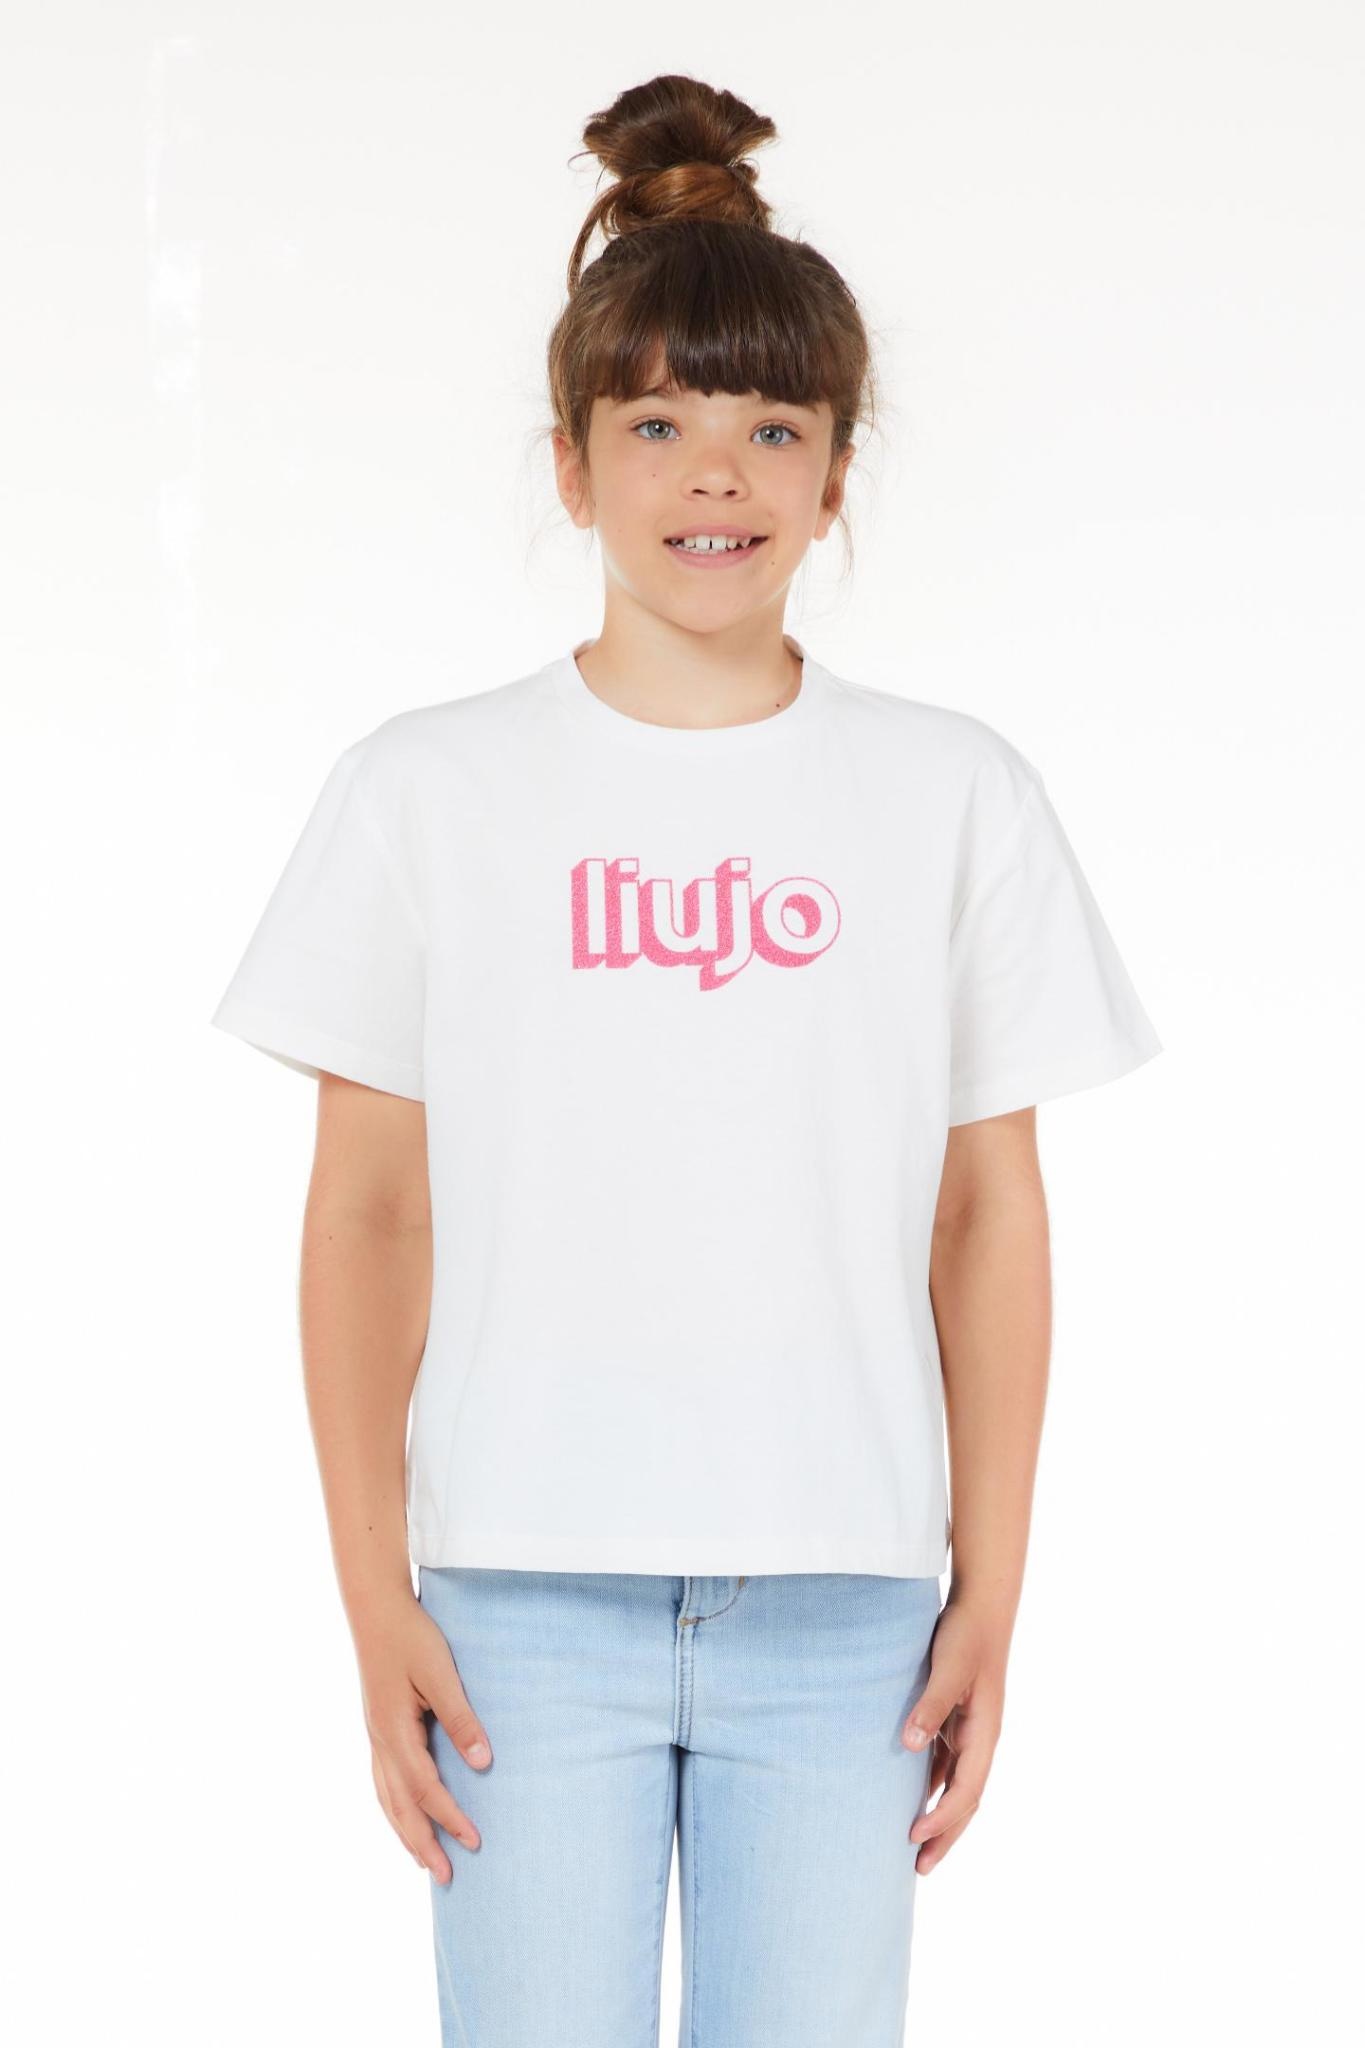 het winkelcentrum capsule Decoratief Liu Jo t-shirt wit logo roze